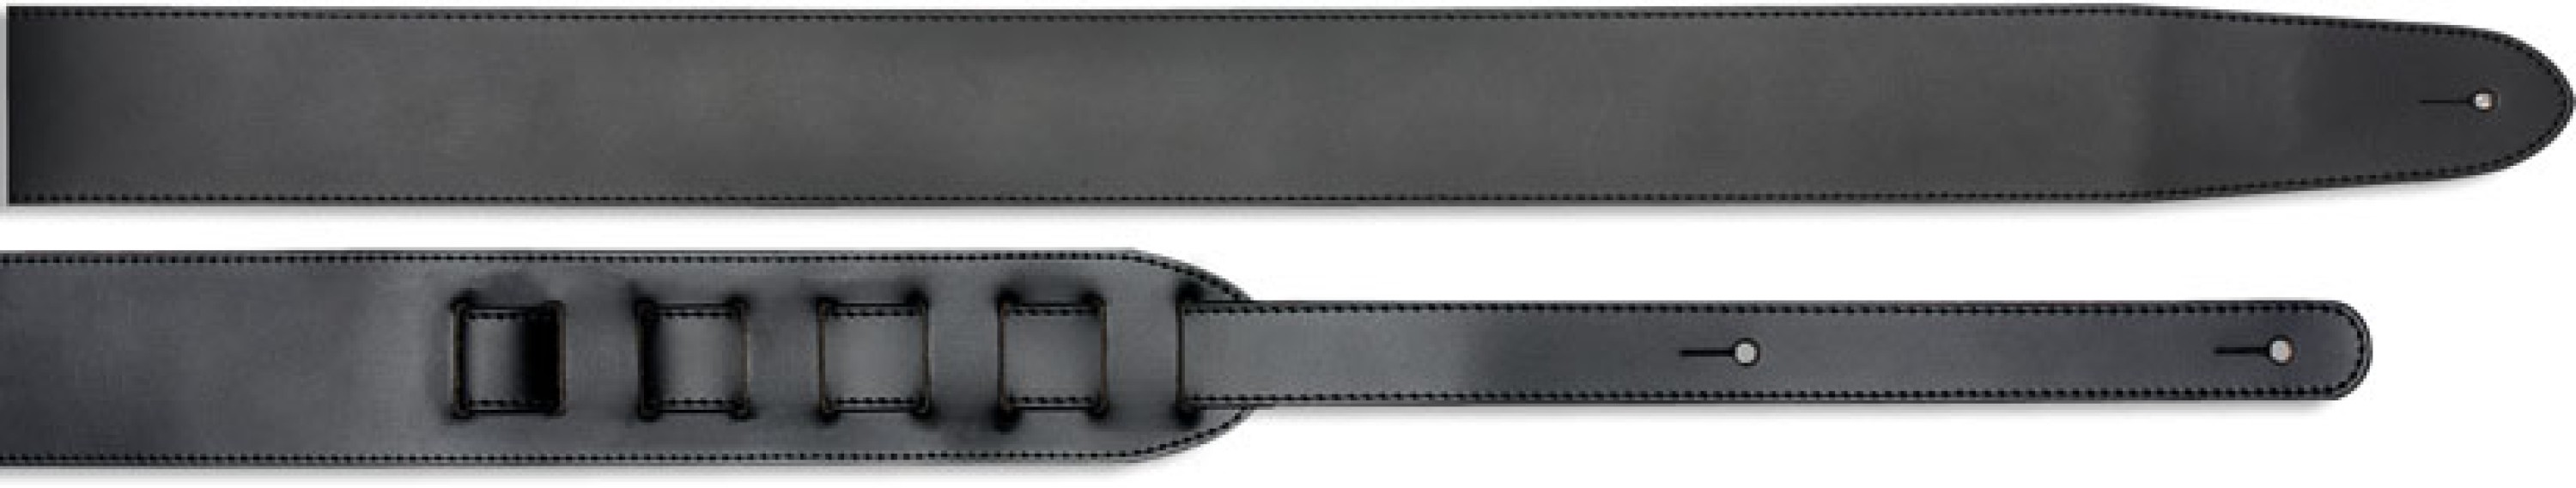 SL 12-5 BLK - 2.4" leather guitar strap